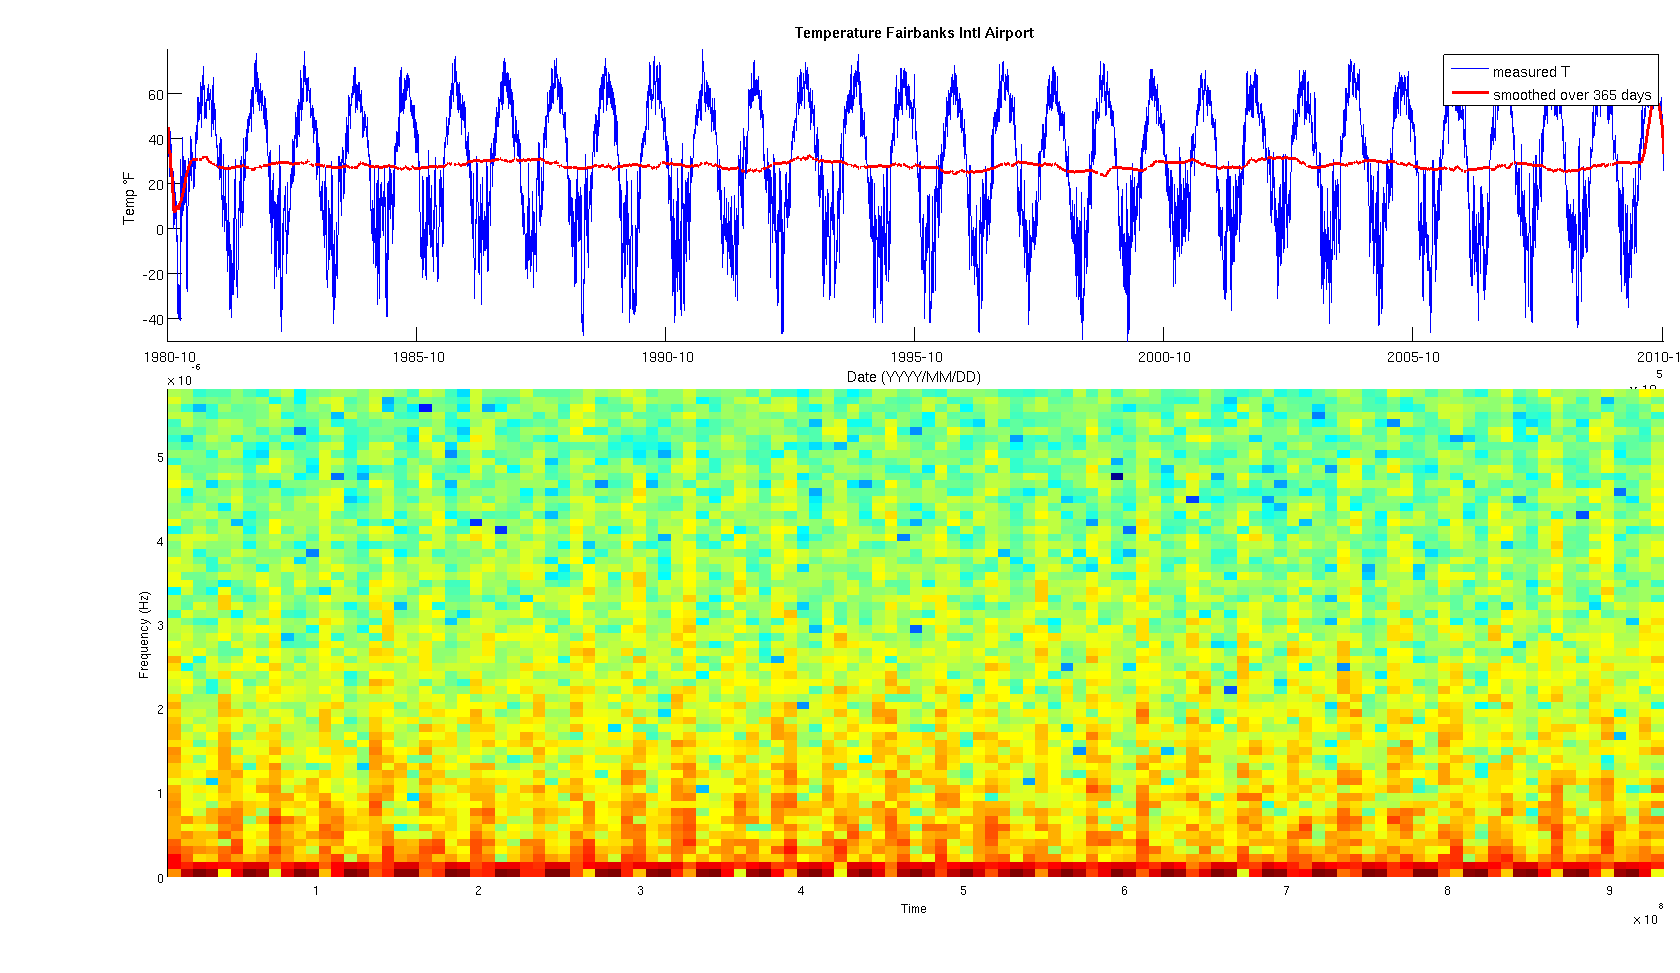 Fairbanks Intl Airport Temperature data, spectrogrma, example